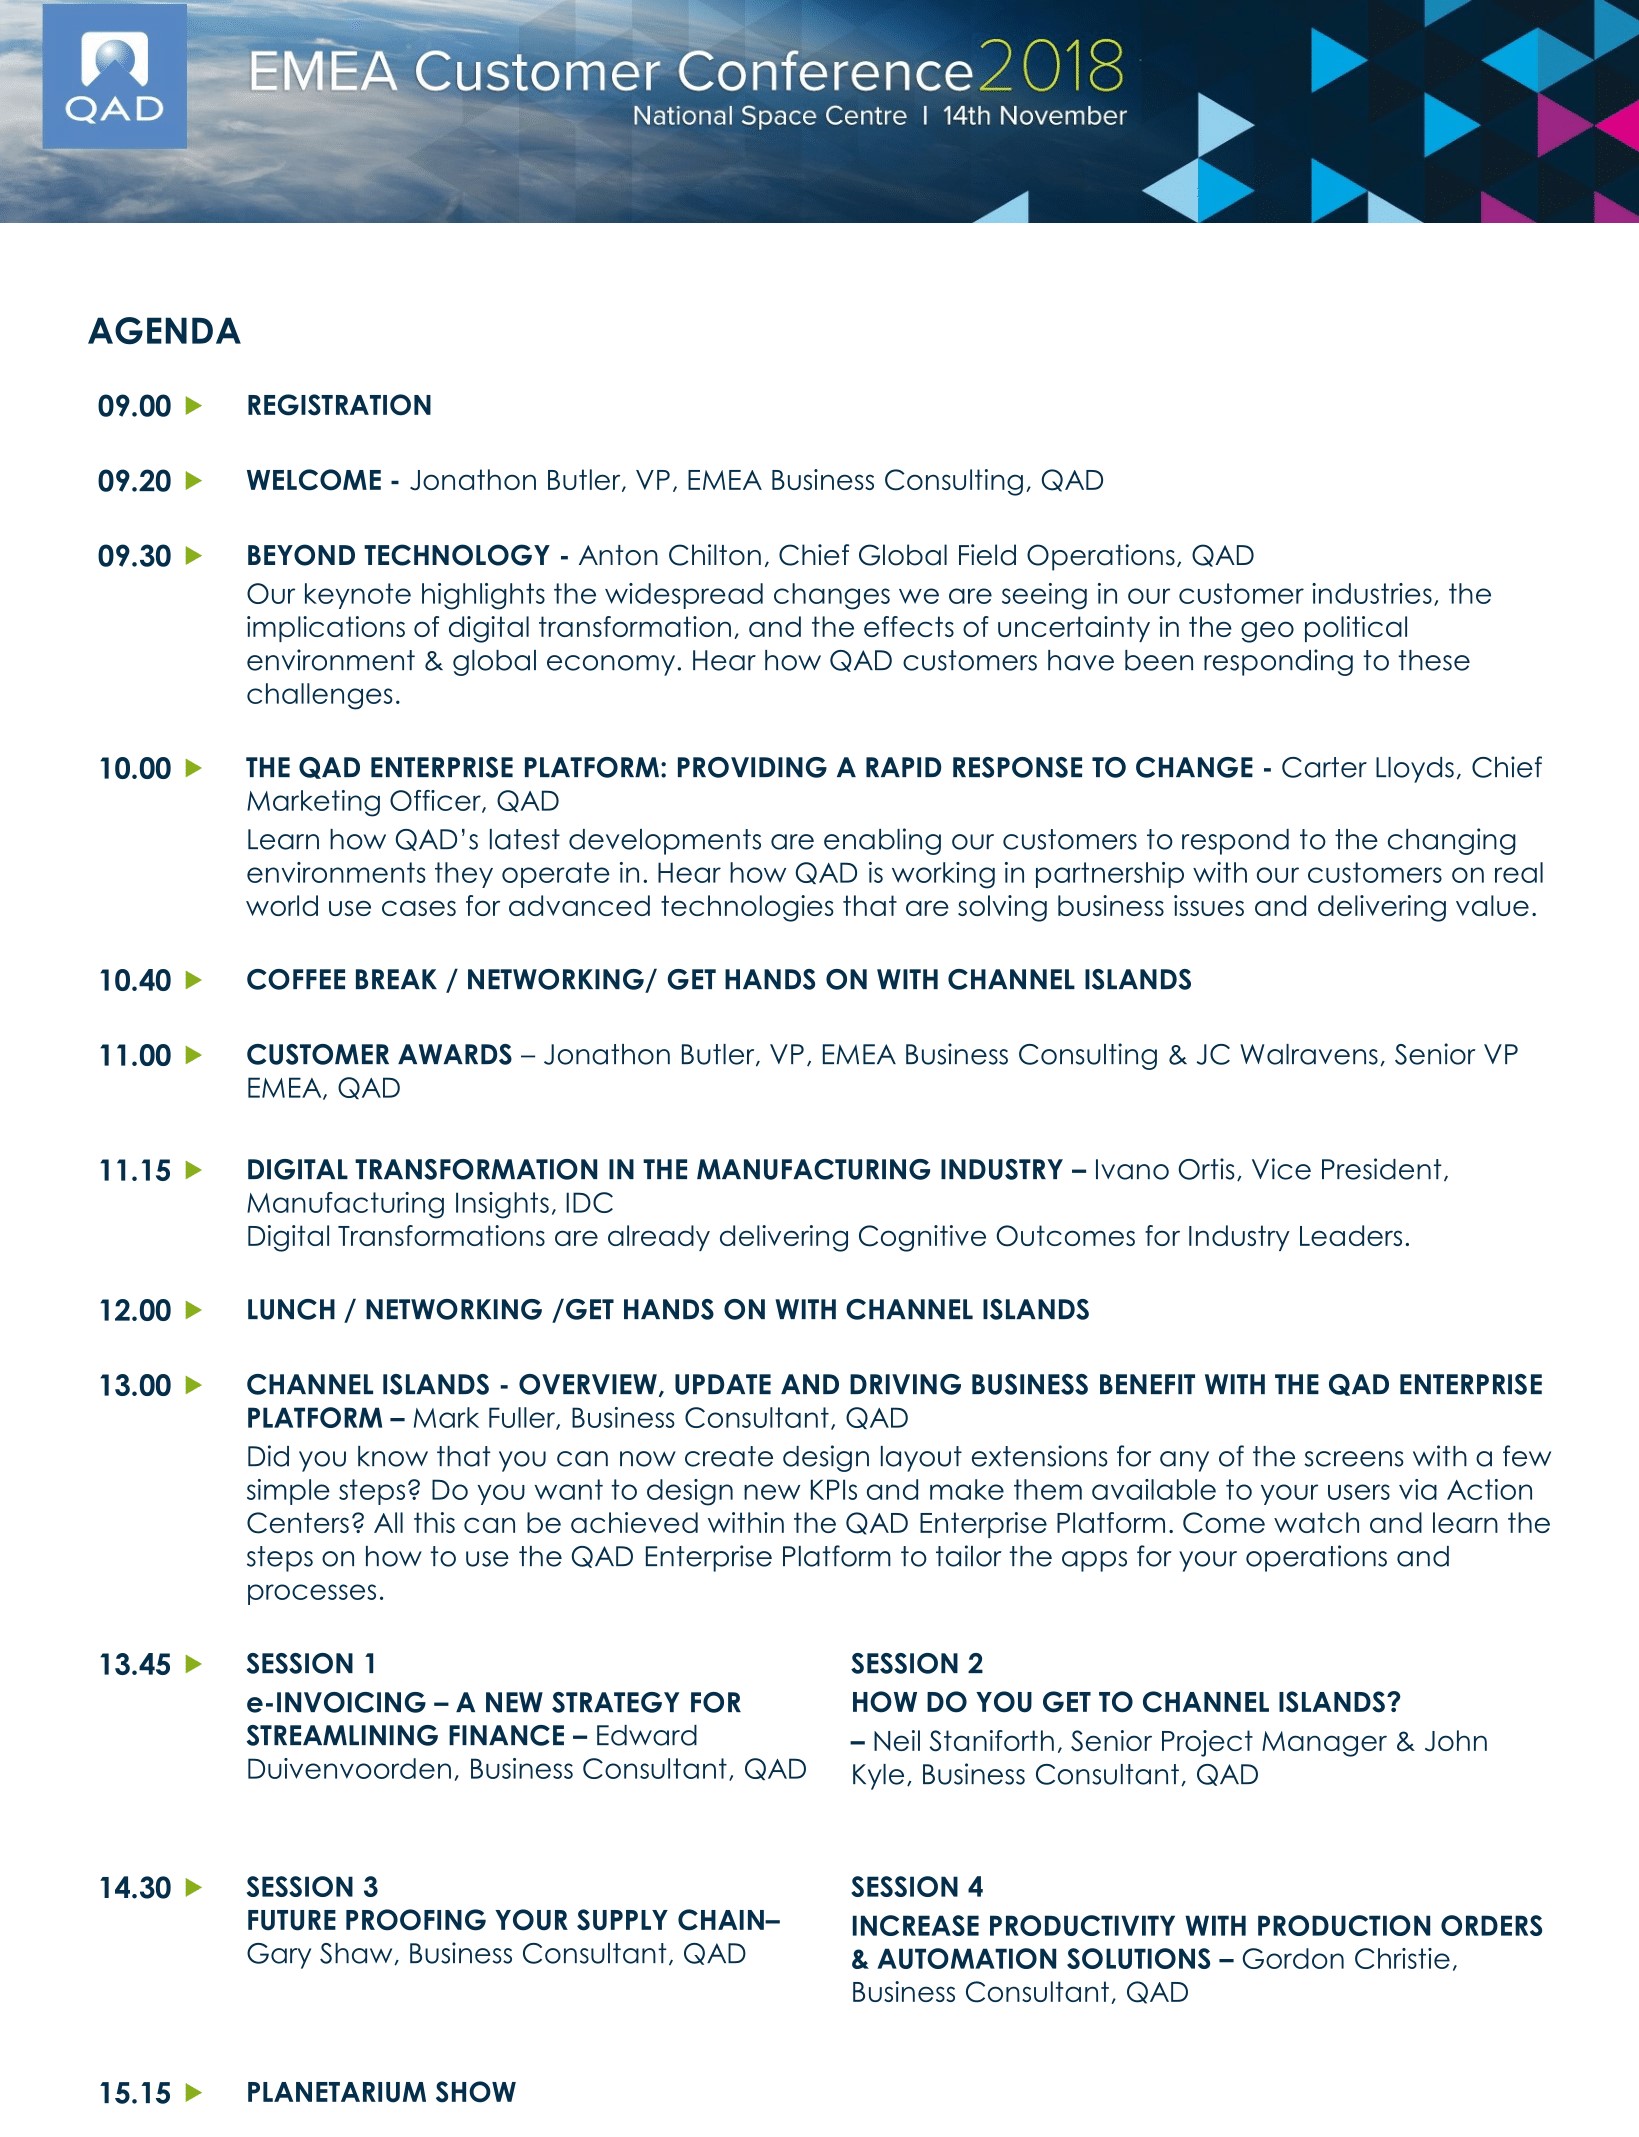 EMEA-Customer Conference Agenda-Newest-1.jpg